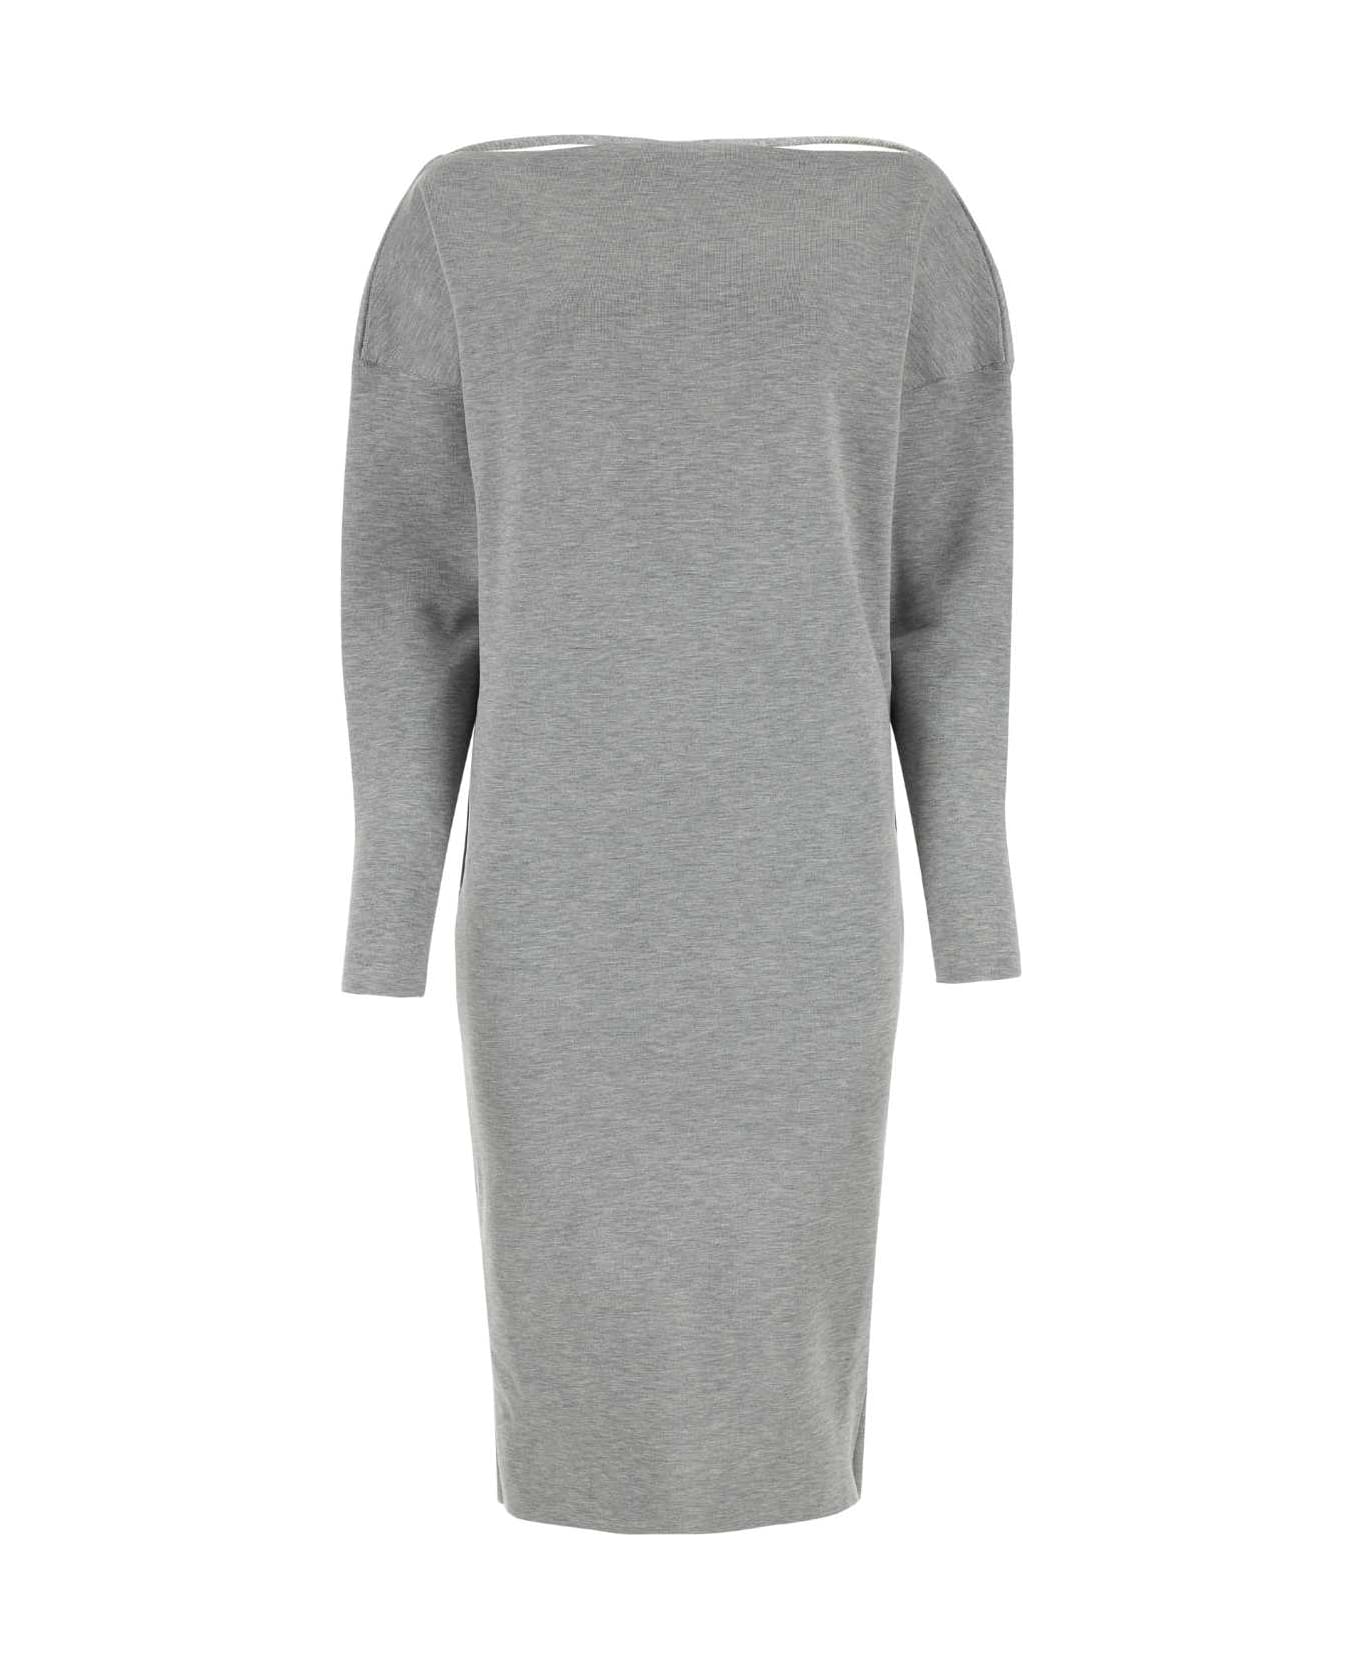 Gucci Grey Stretch Wool Blend Dress - LIGHTGREYMELANGE